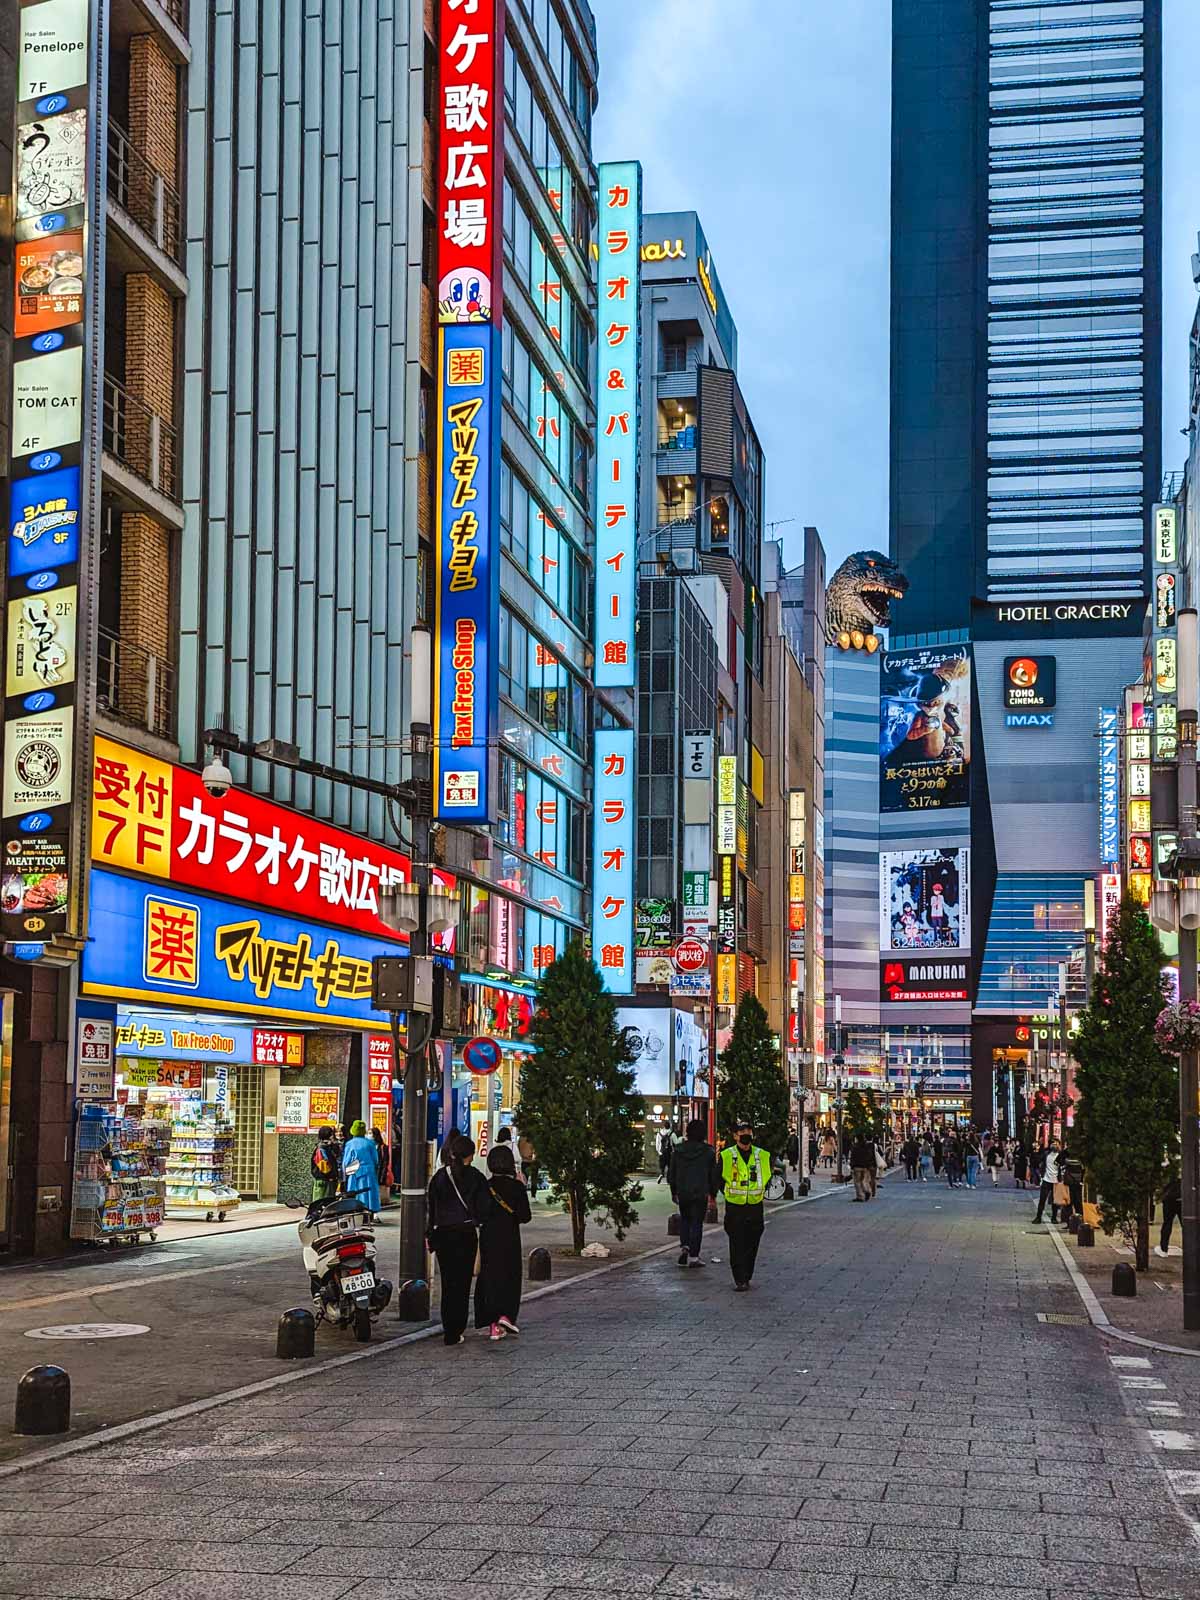 Street view of Shinjuku Tokyo at night with billboards and Godzilla statue.